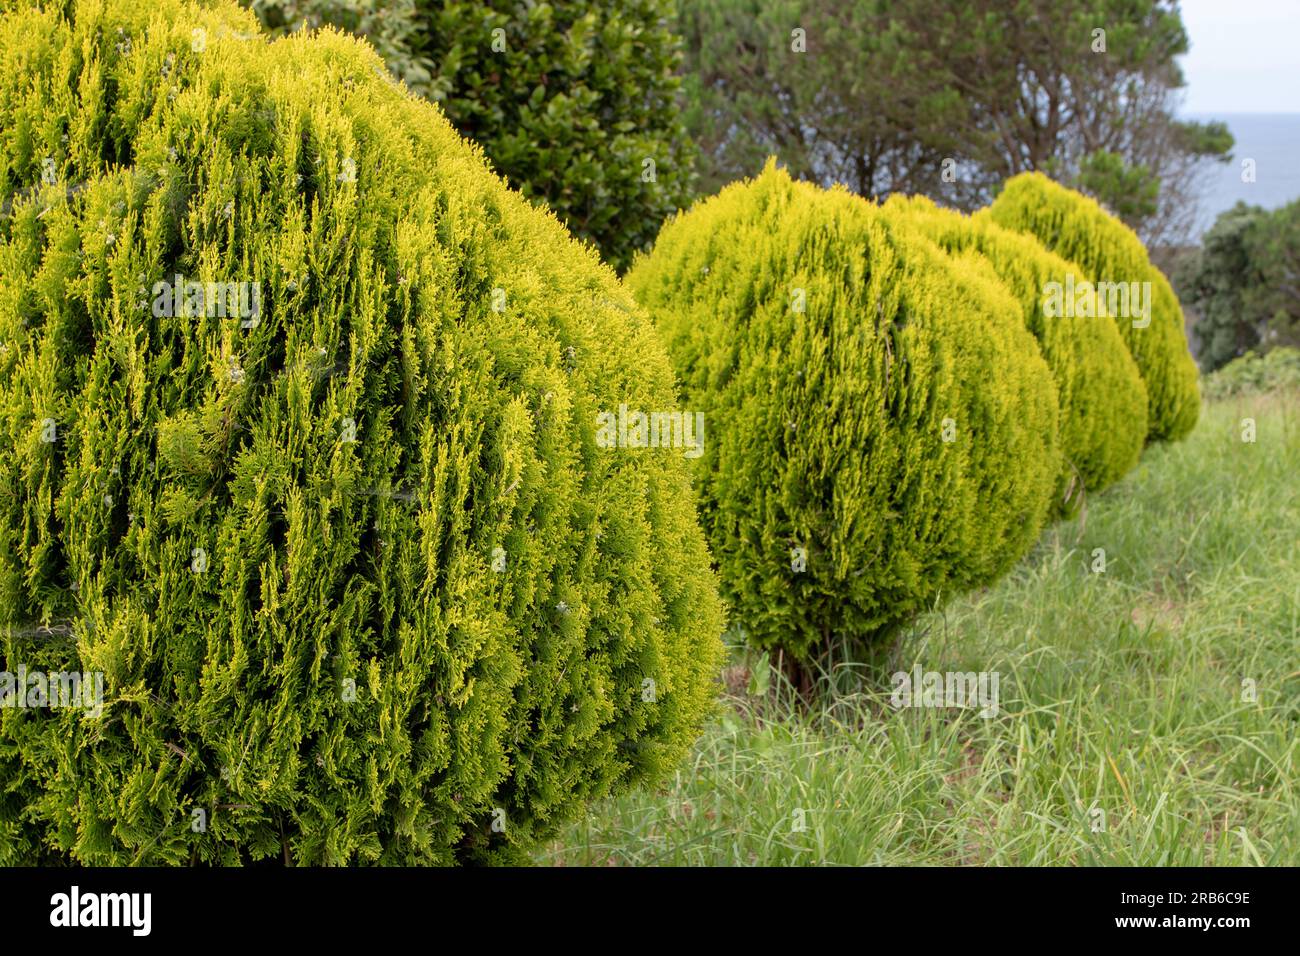 Platycladus orientalis or thuja orientalis Aurea Nana. Dwarf Golden Oriental Thuja plants in a row. Stock Photo